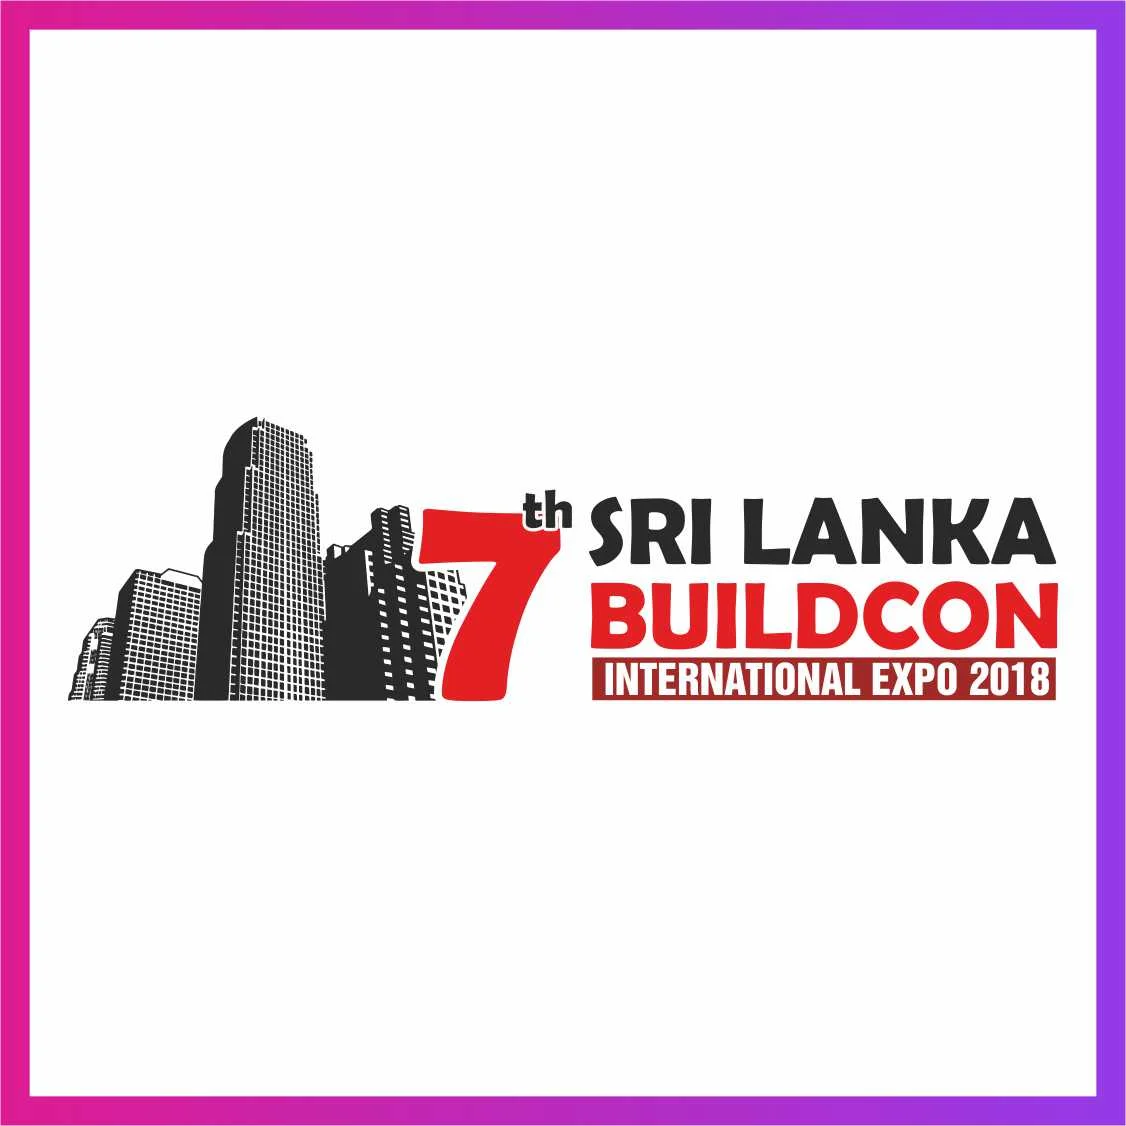 Sri Lanka Buildcon International Expo 2018